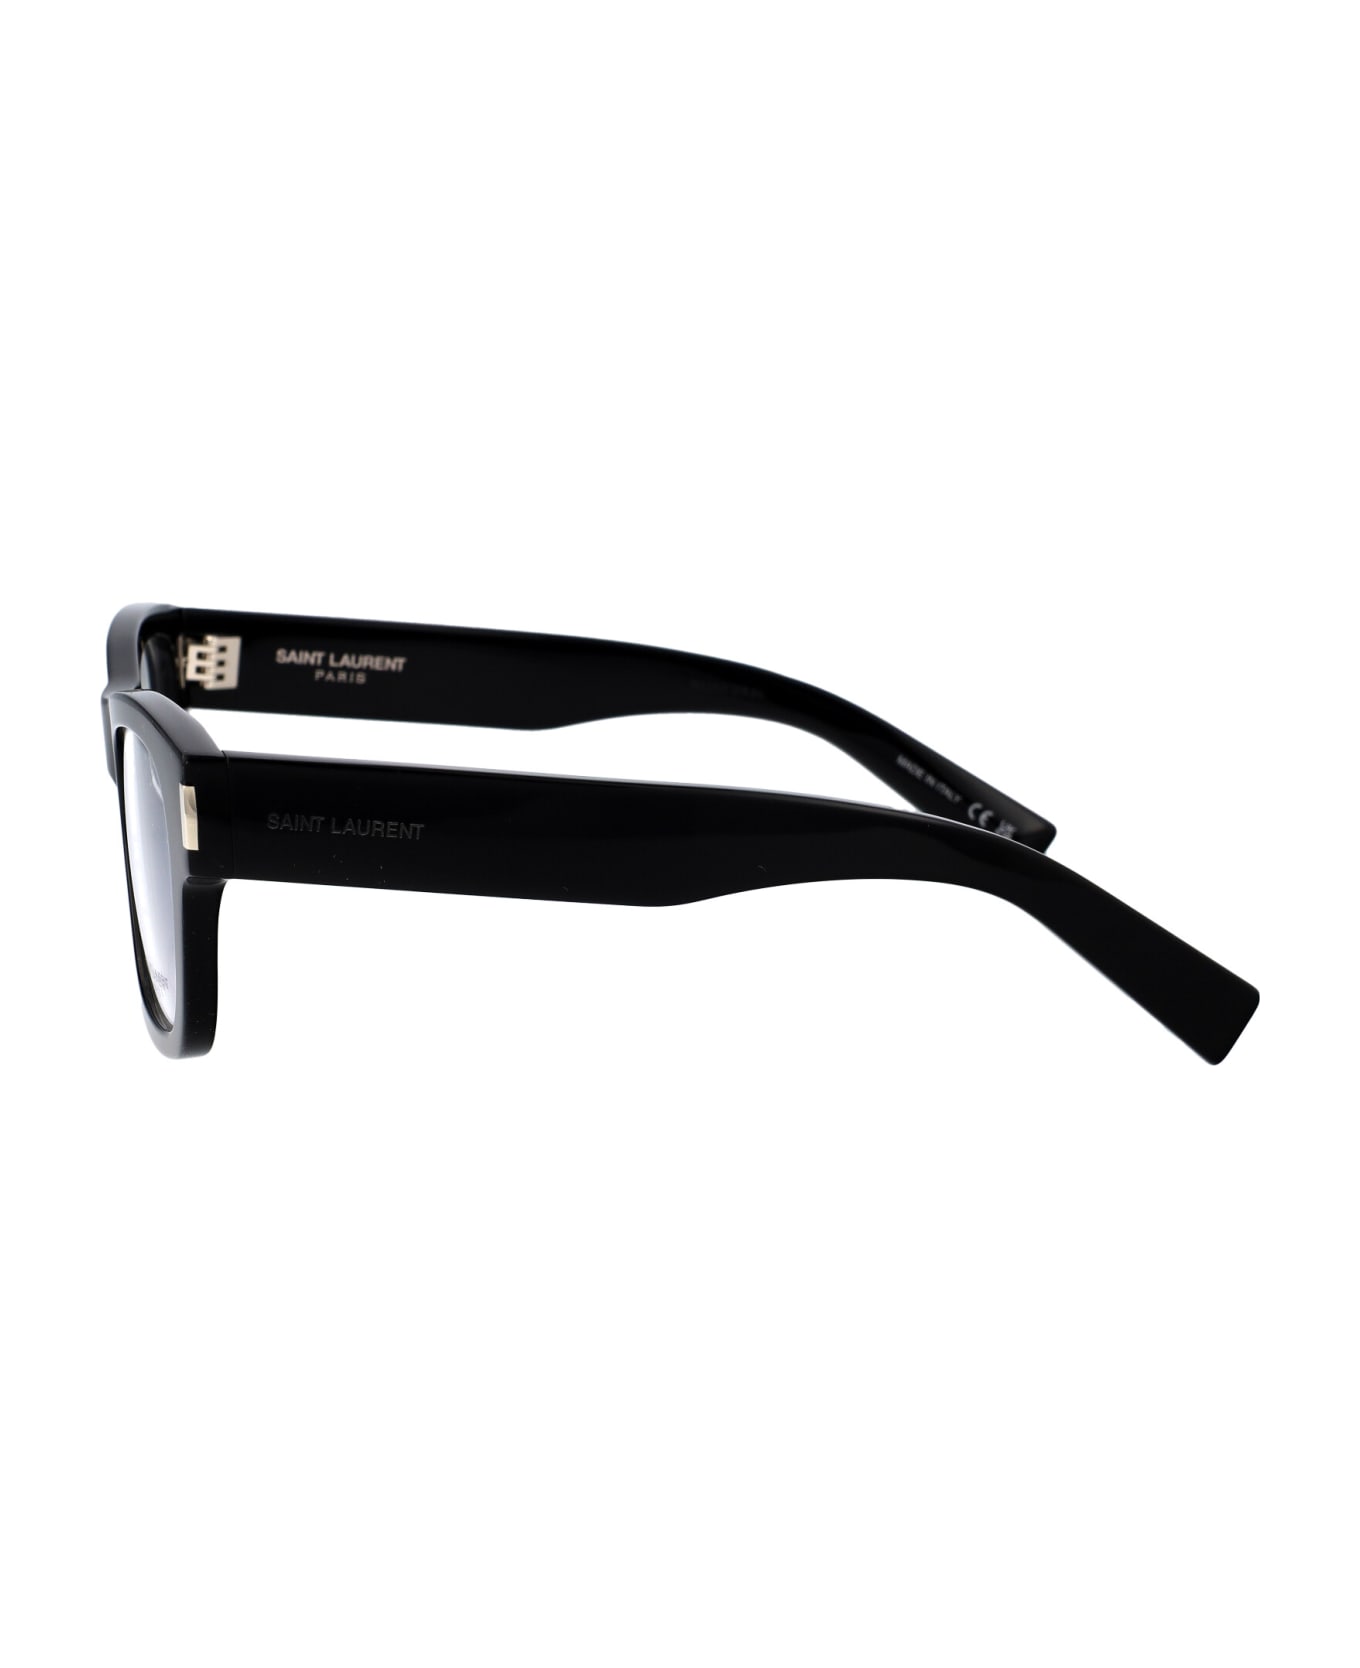 Saint Laurent Eyewear Sl 698 Glasses - 001 BLACK BLACK TRANSPARENT